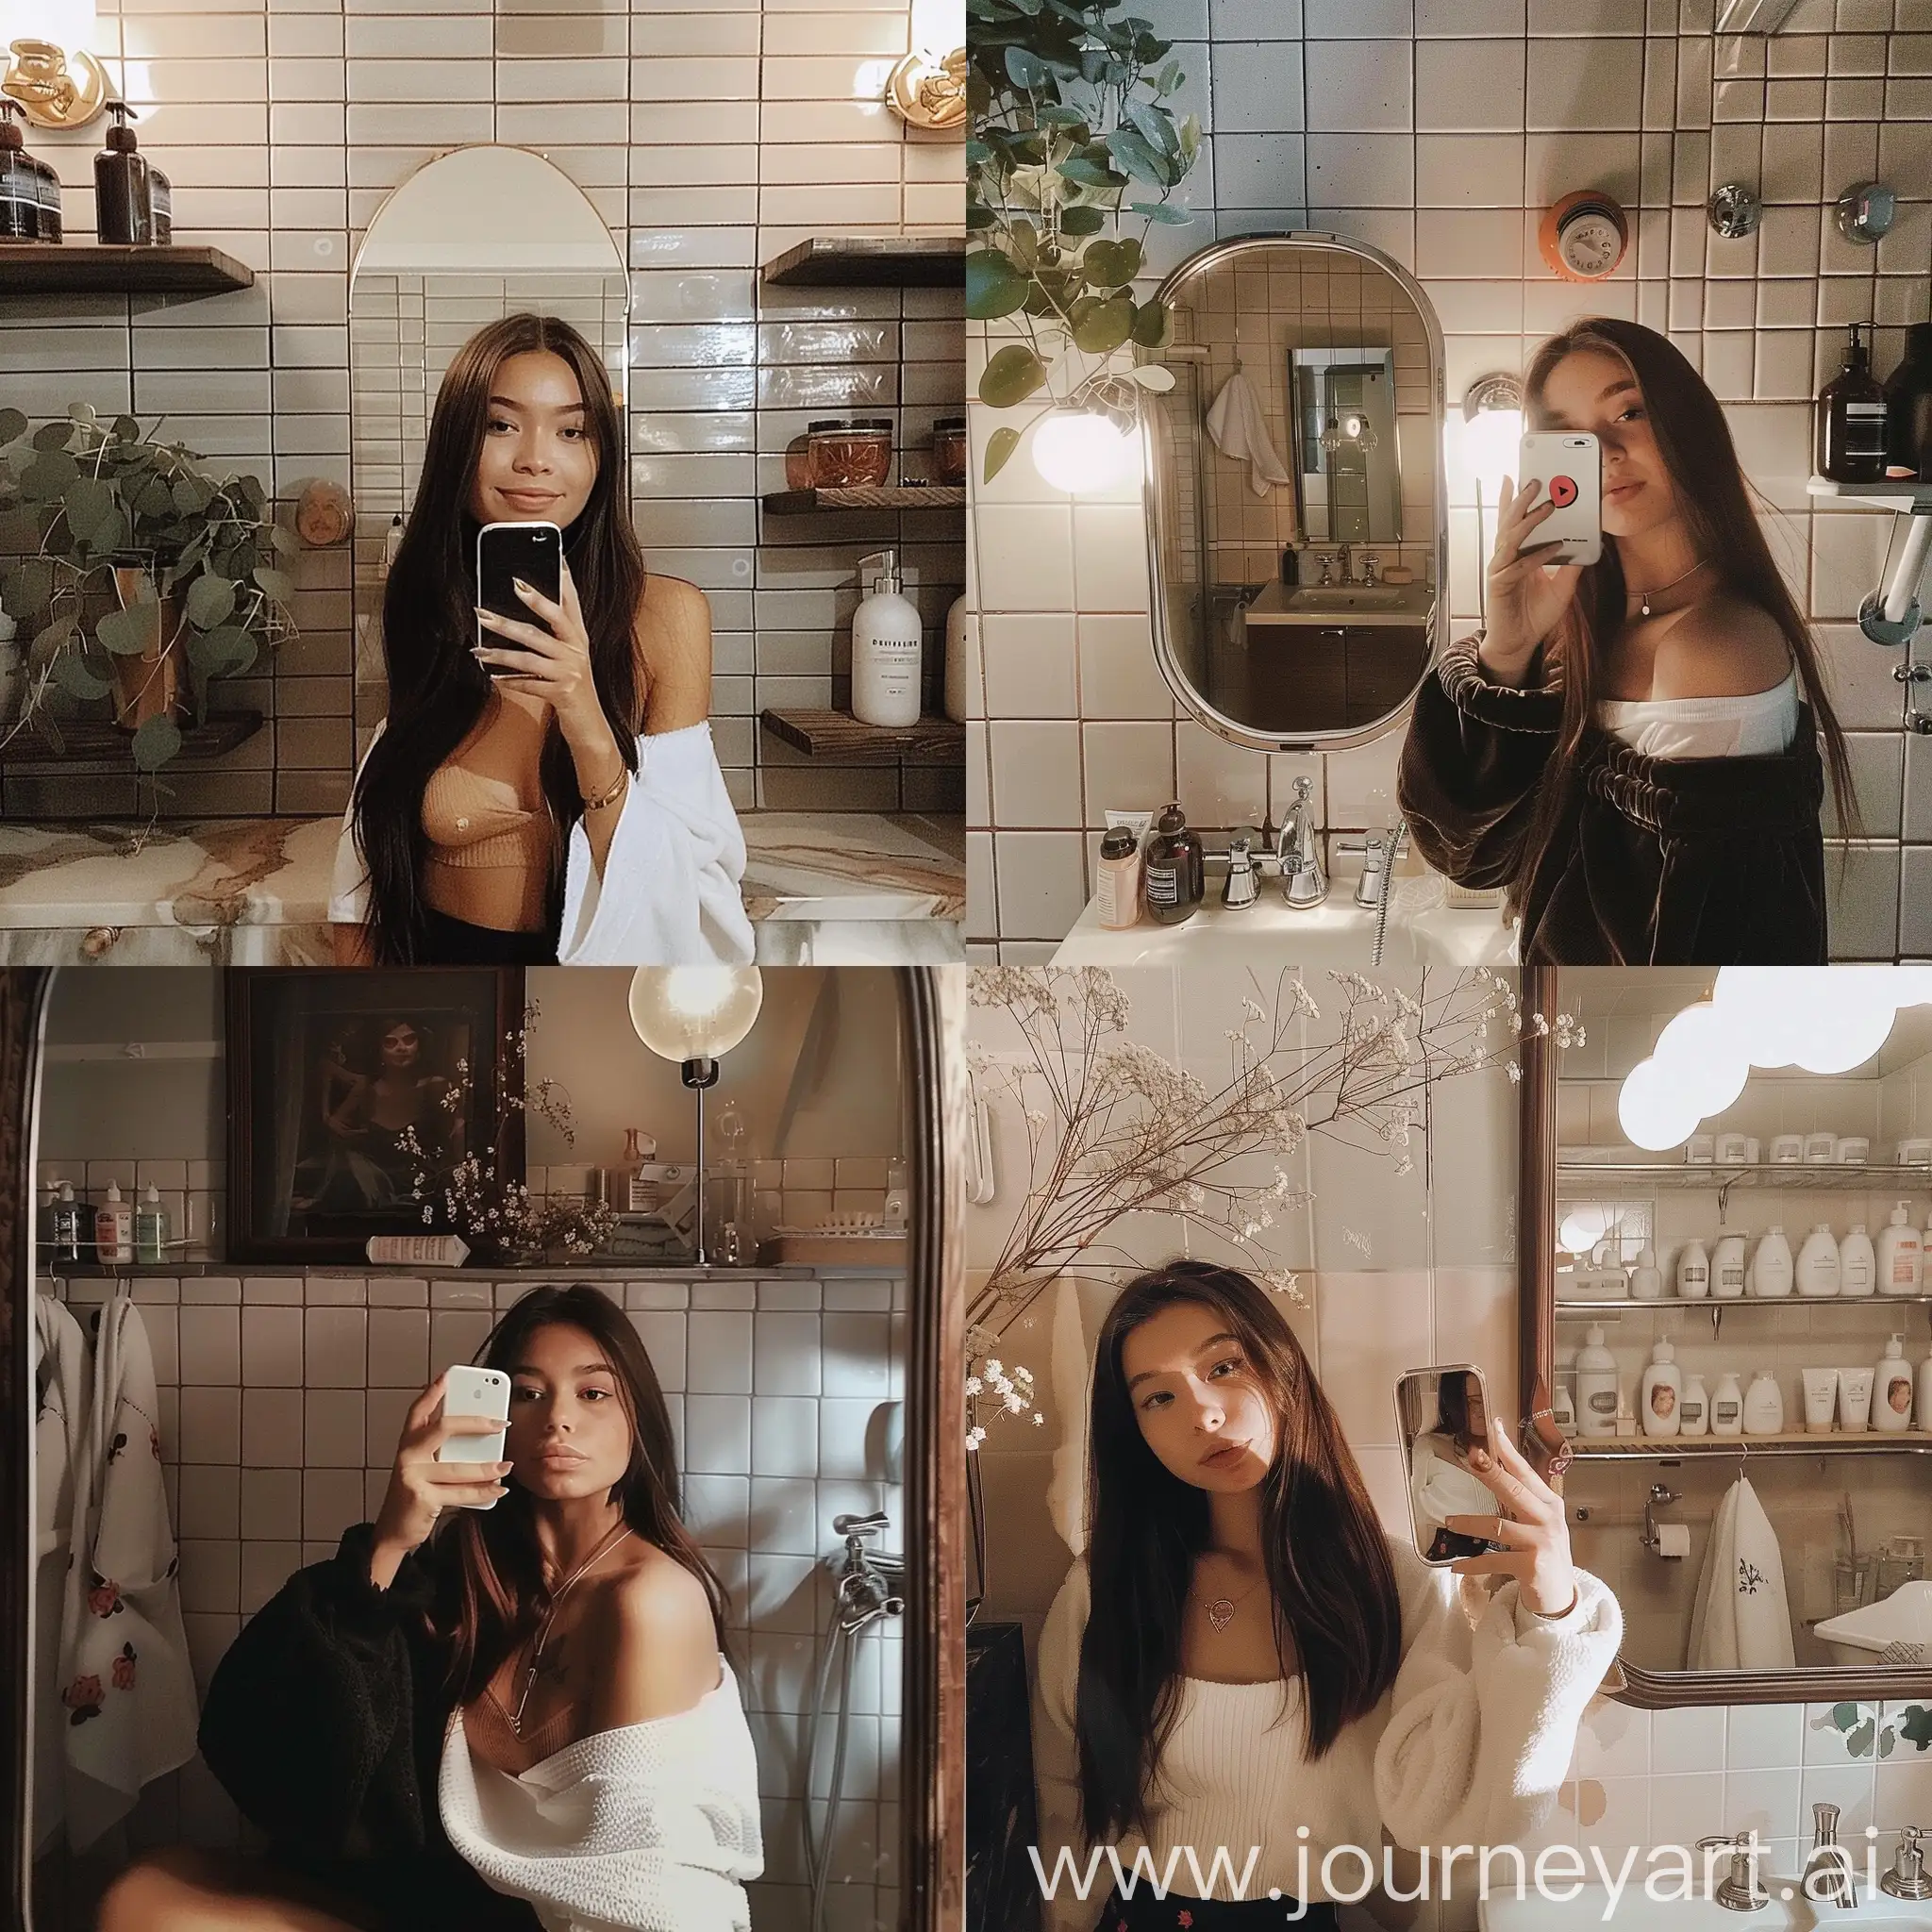 Chic-Bathroom-Selfie-Stylish-Girl-Captures-Aesthetic-Moment